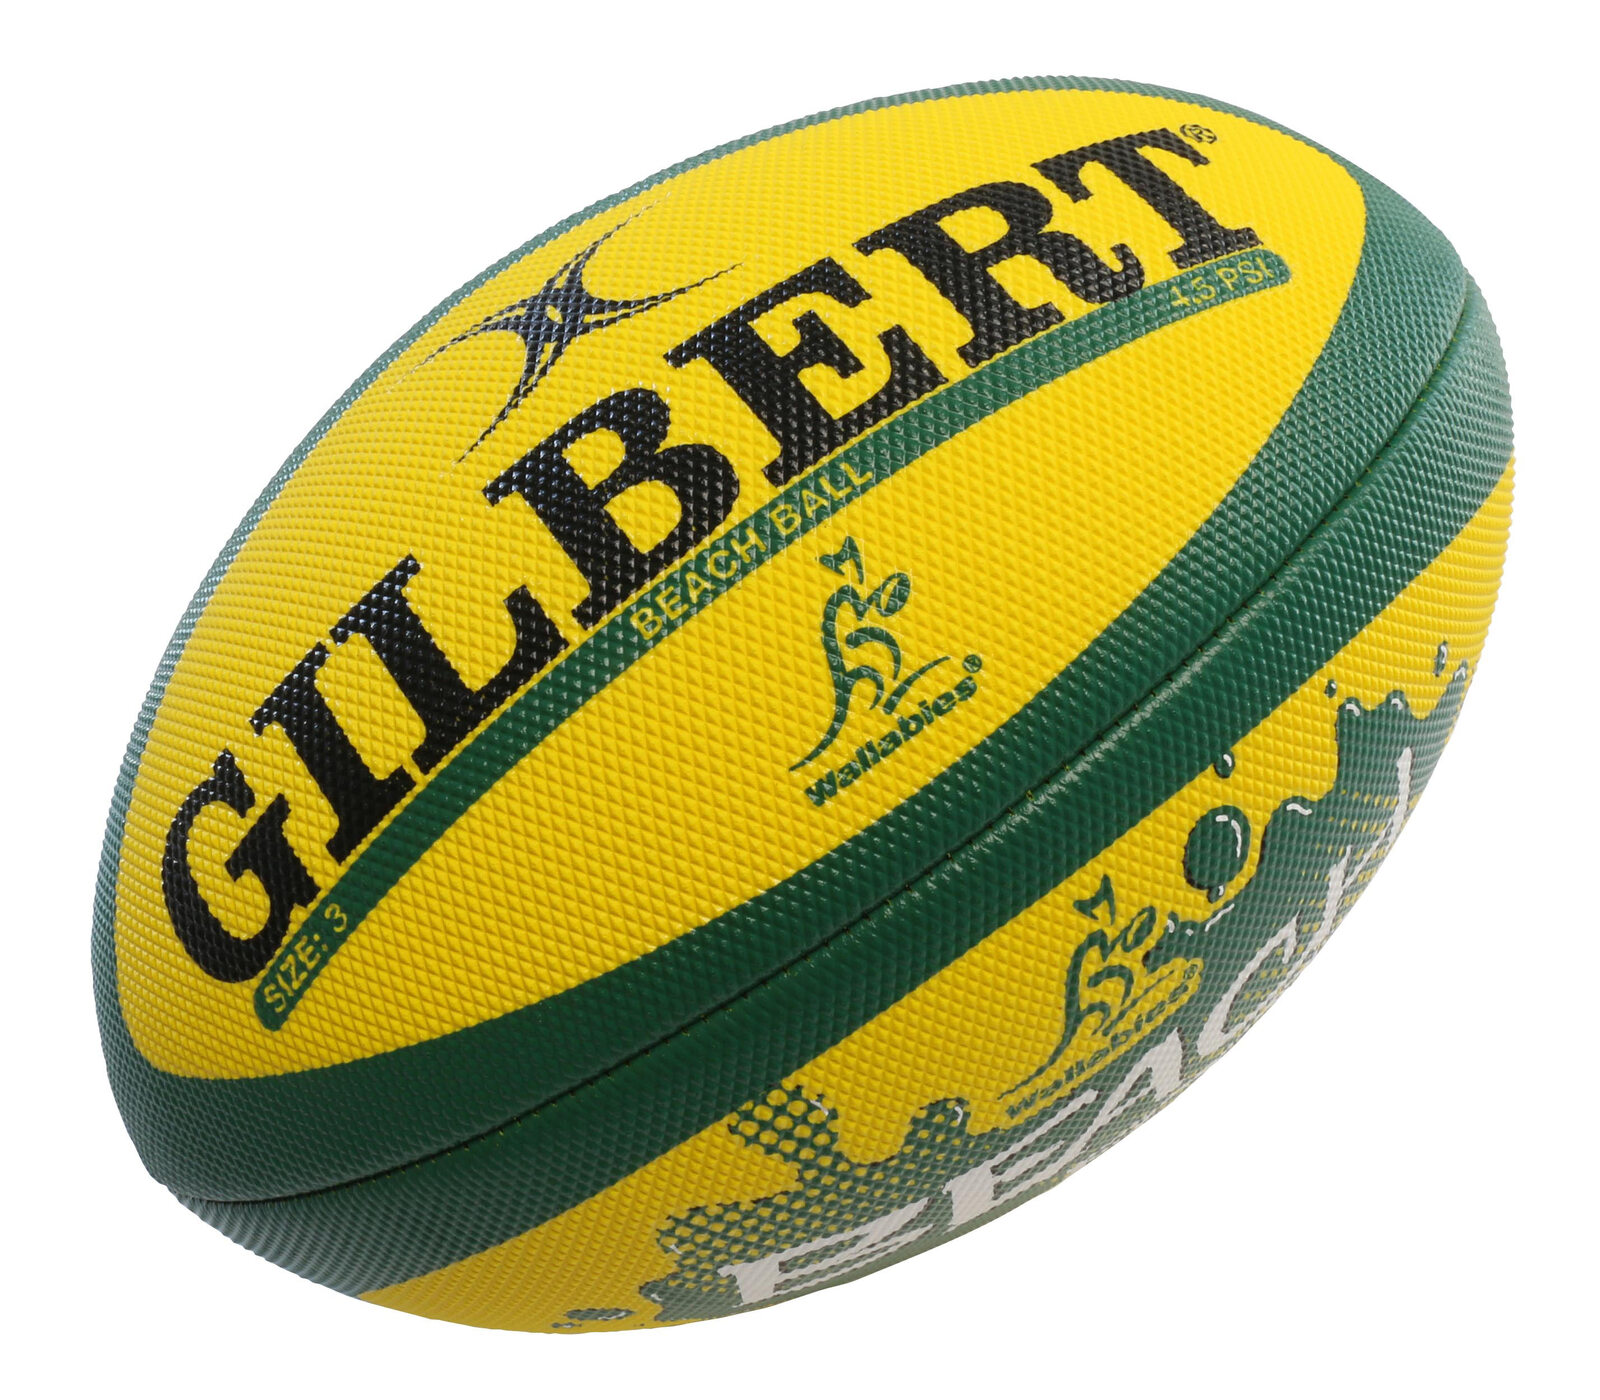 Gilbert Wallabies Beach Supporter Rugby Union Ball  For 